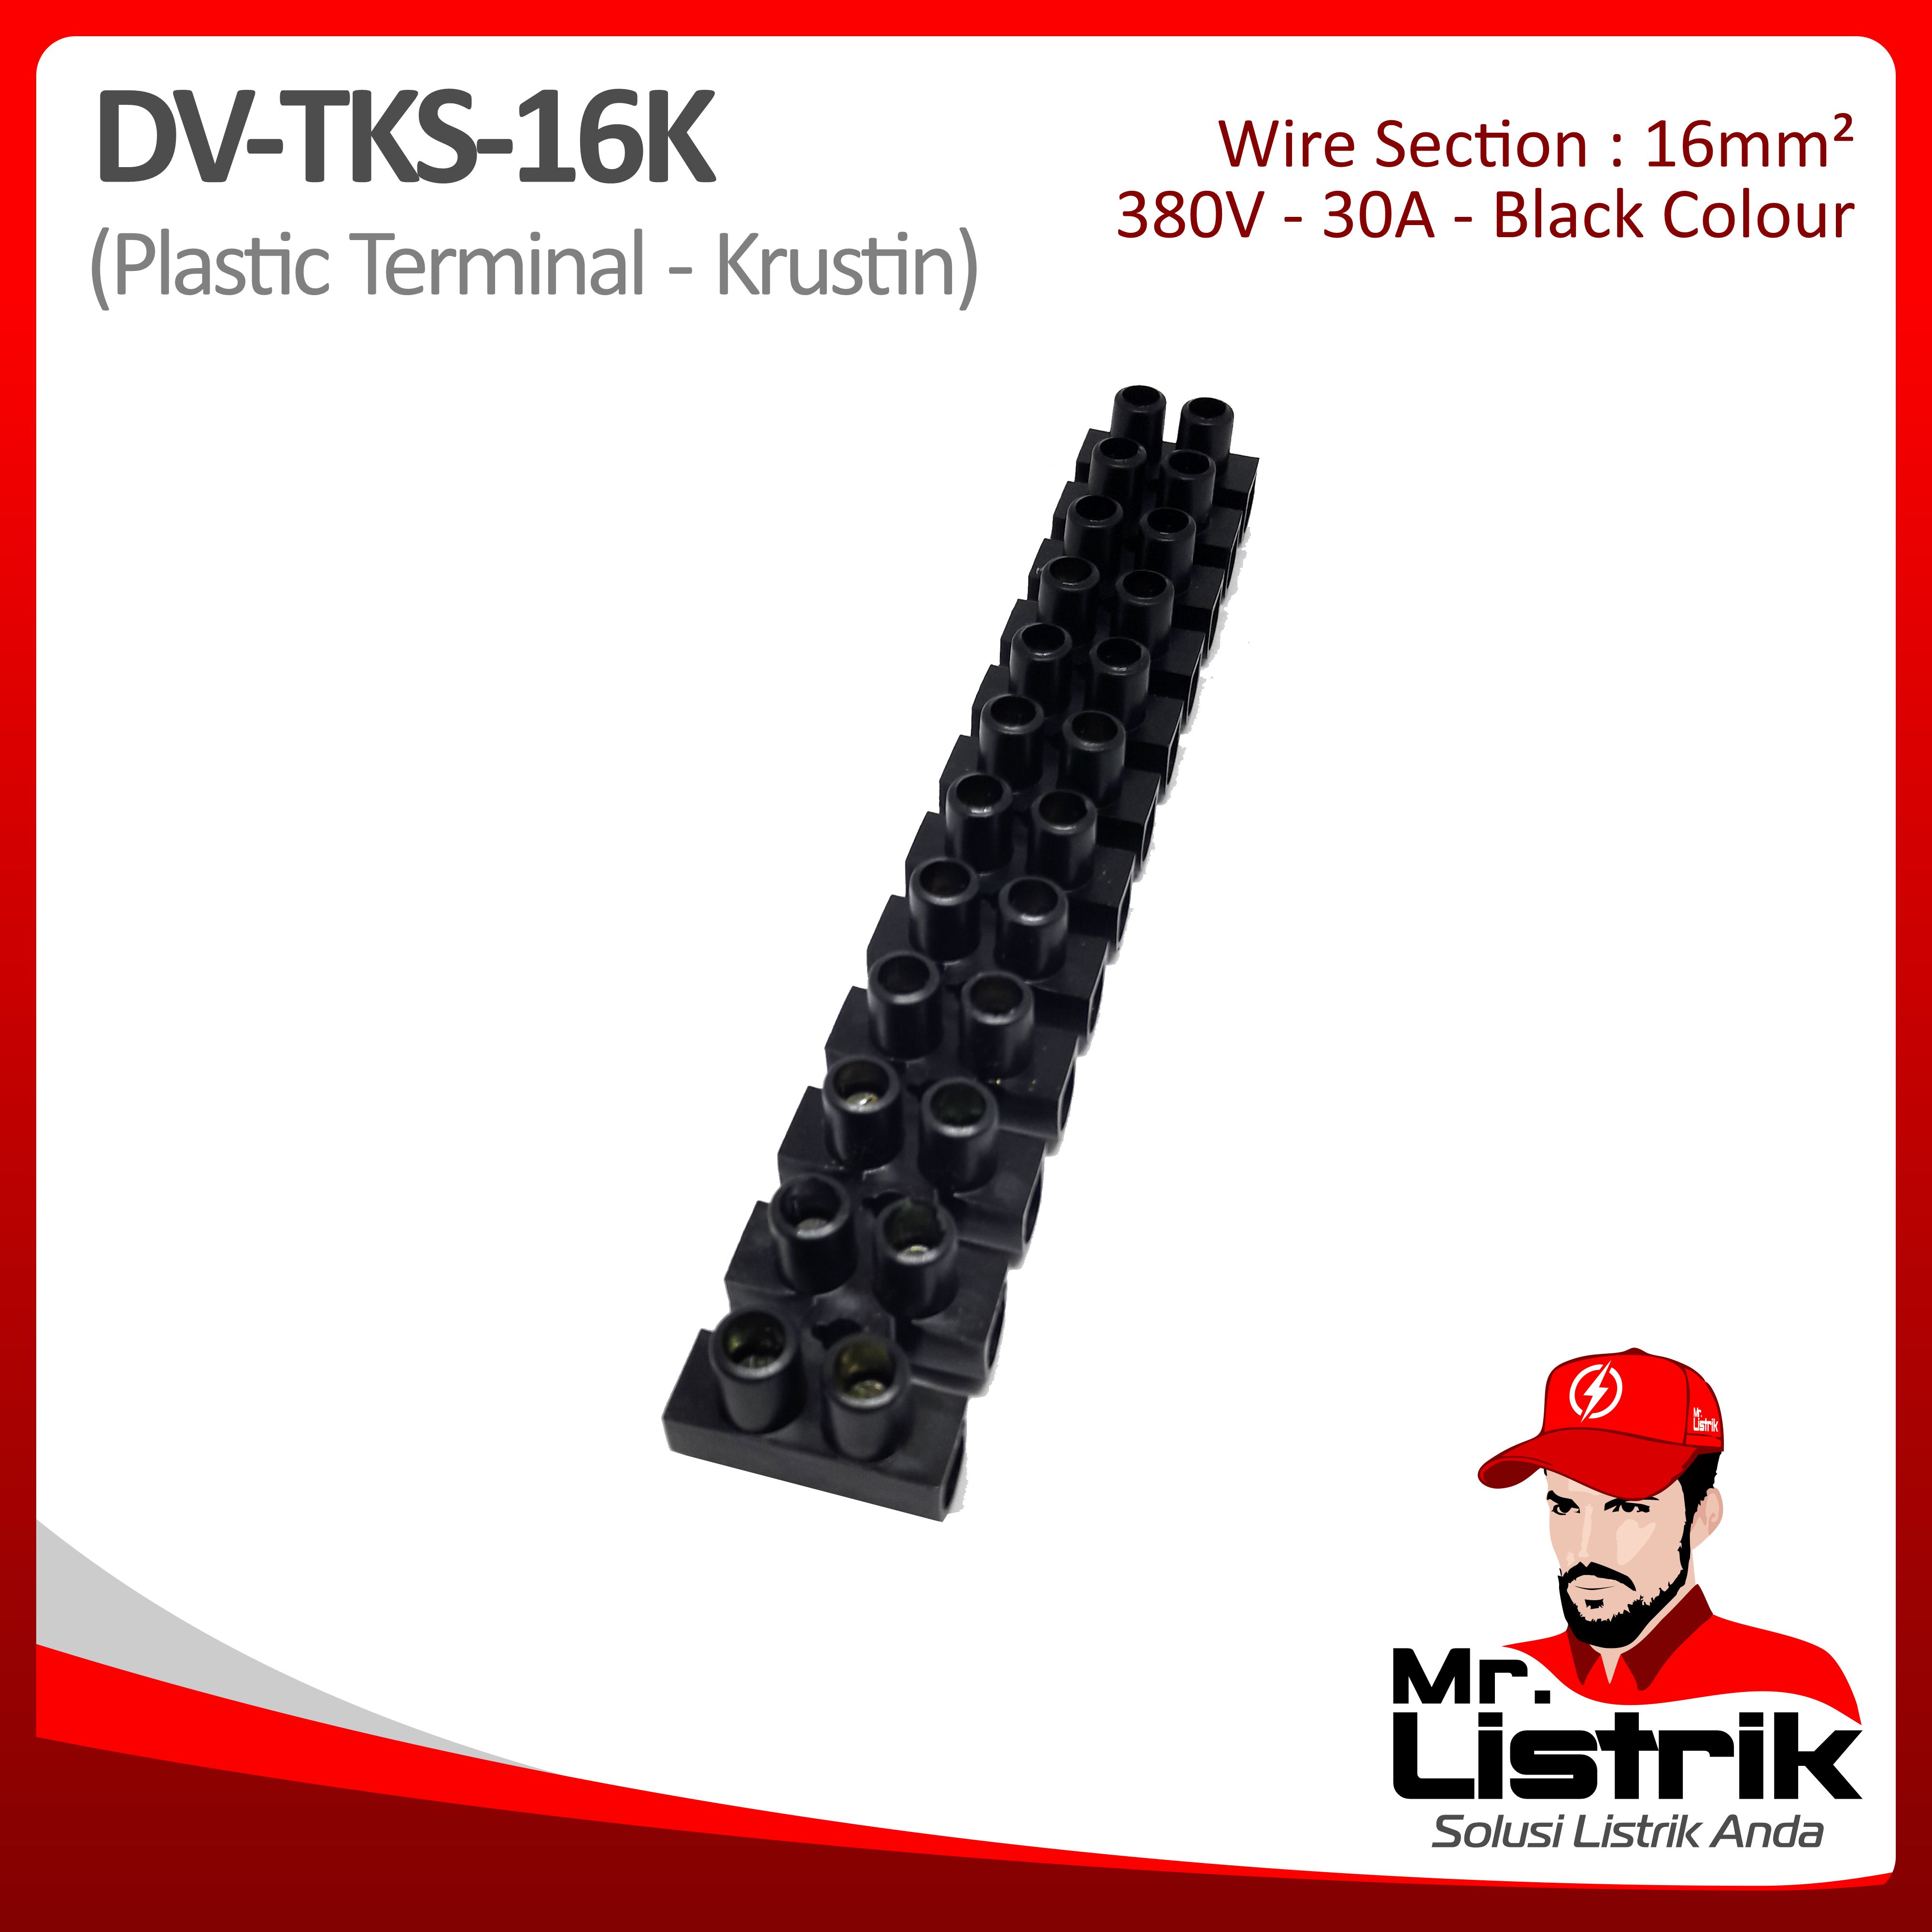 Terminal Block Krustin 16mm DV TKS-16K